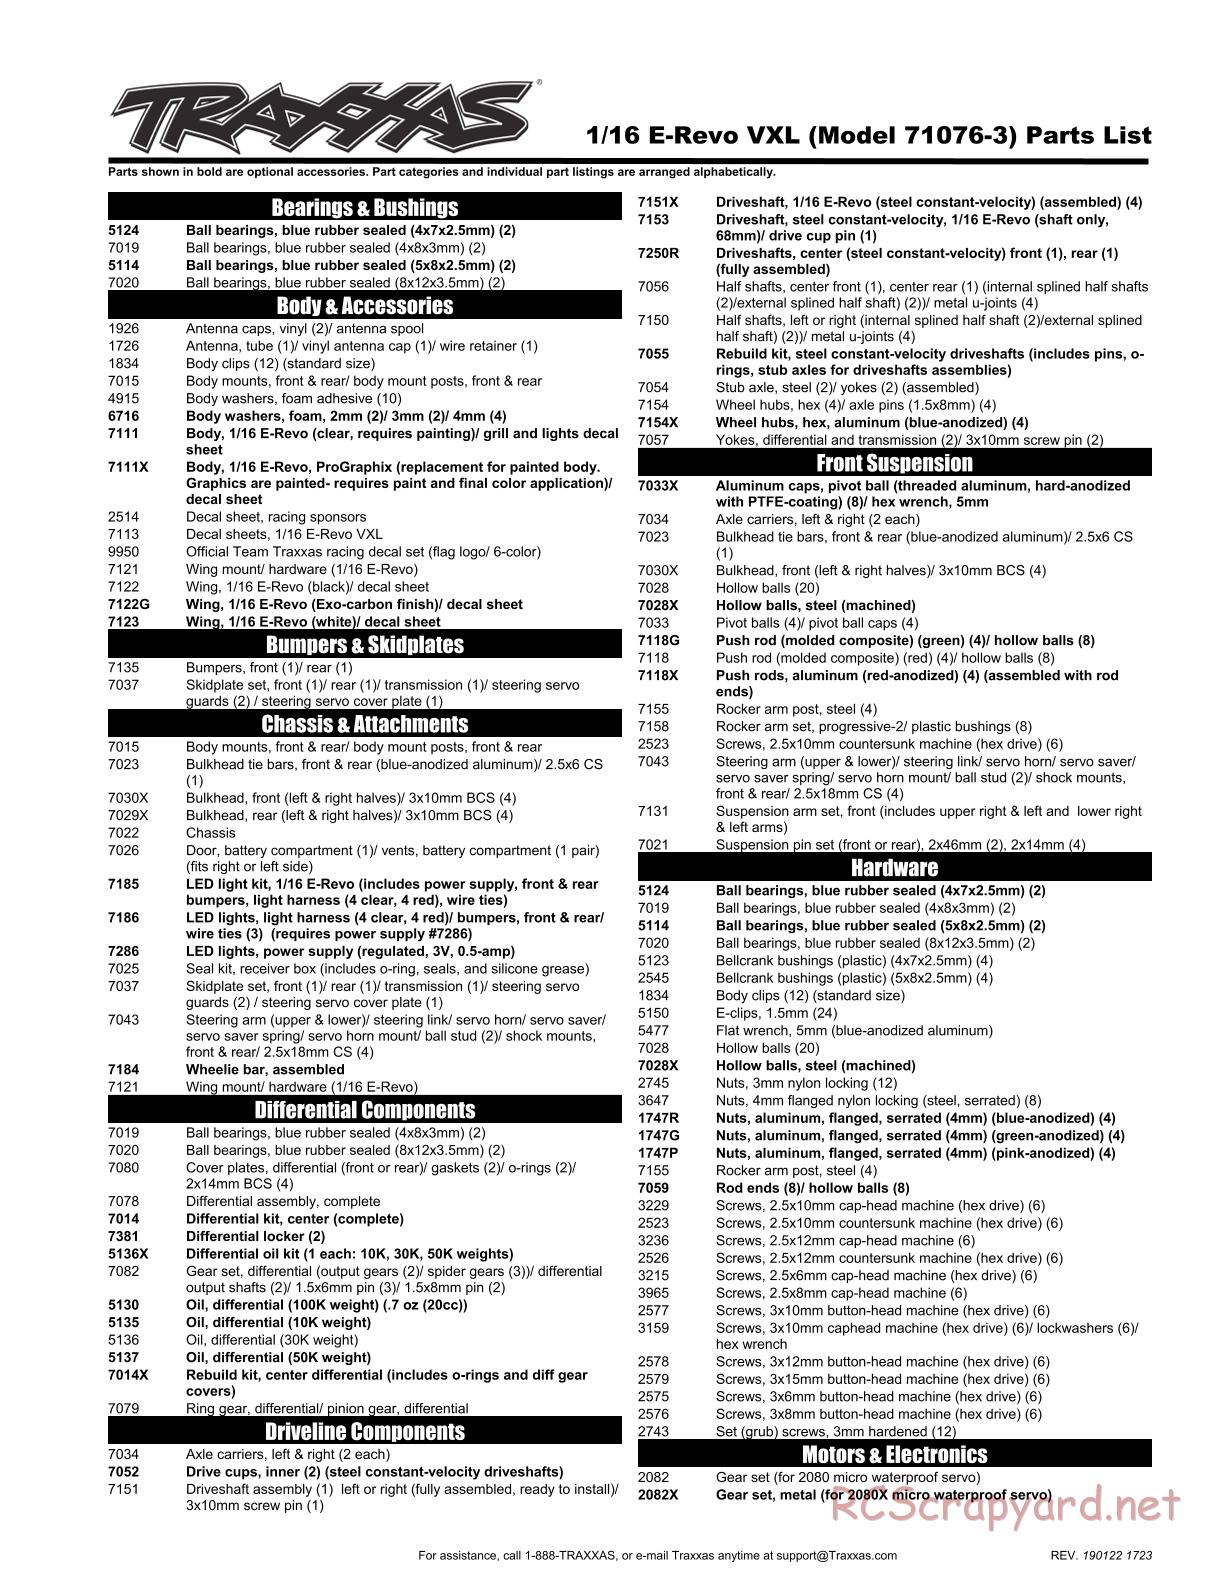 Traxxas - 1/16 E-Revo VXL TSM - Parts List - Page 1